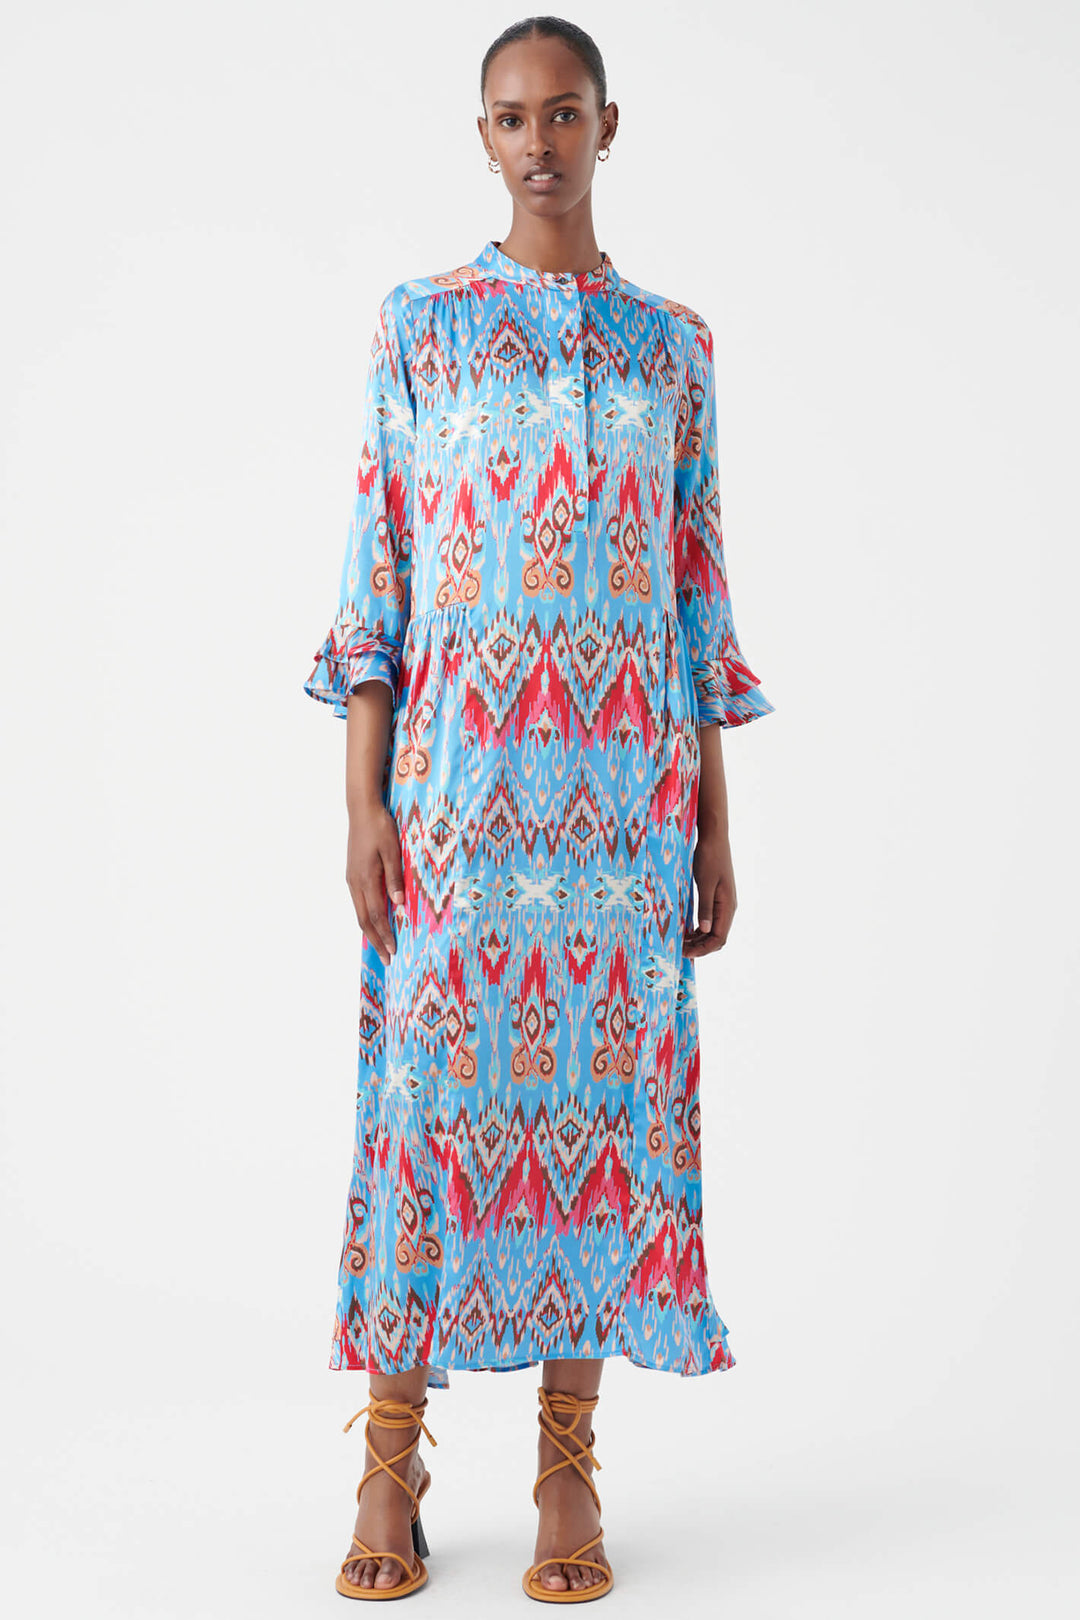 Dea Kudibal Rosanna 116-0423 Blue Ikat Malibu Ruffle Sleeve Dress - Olivia Grace Fashion